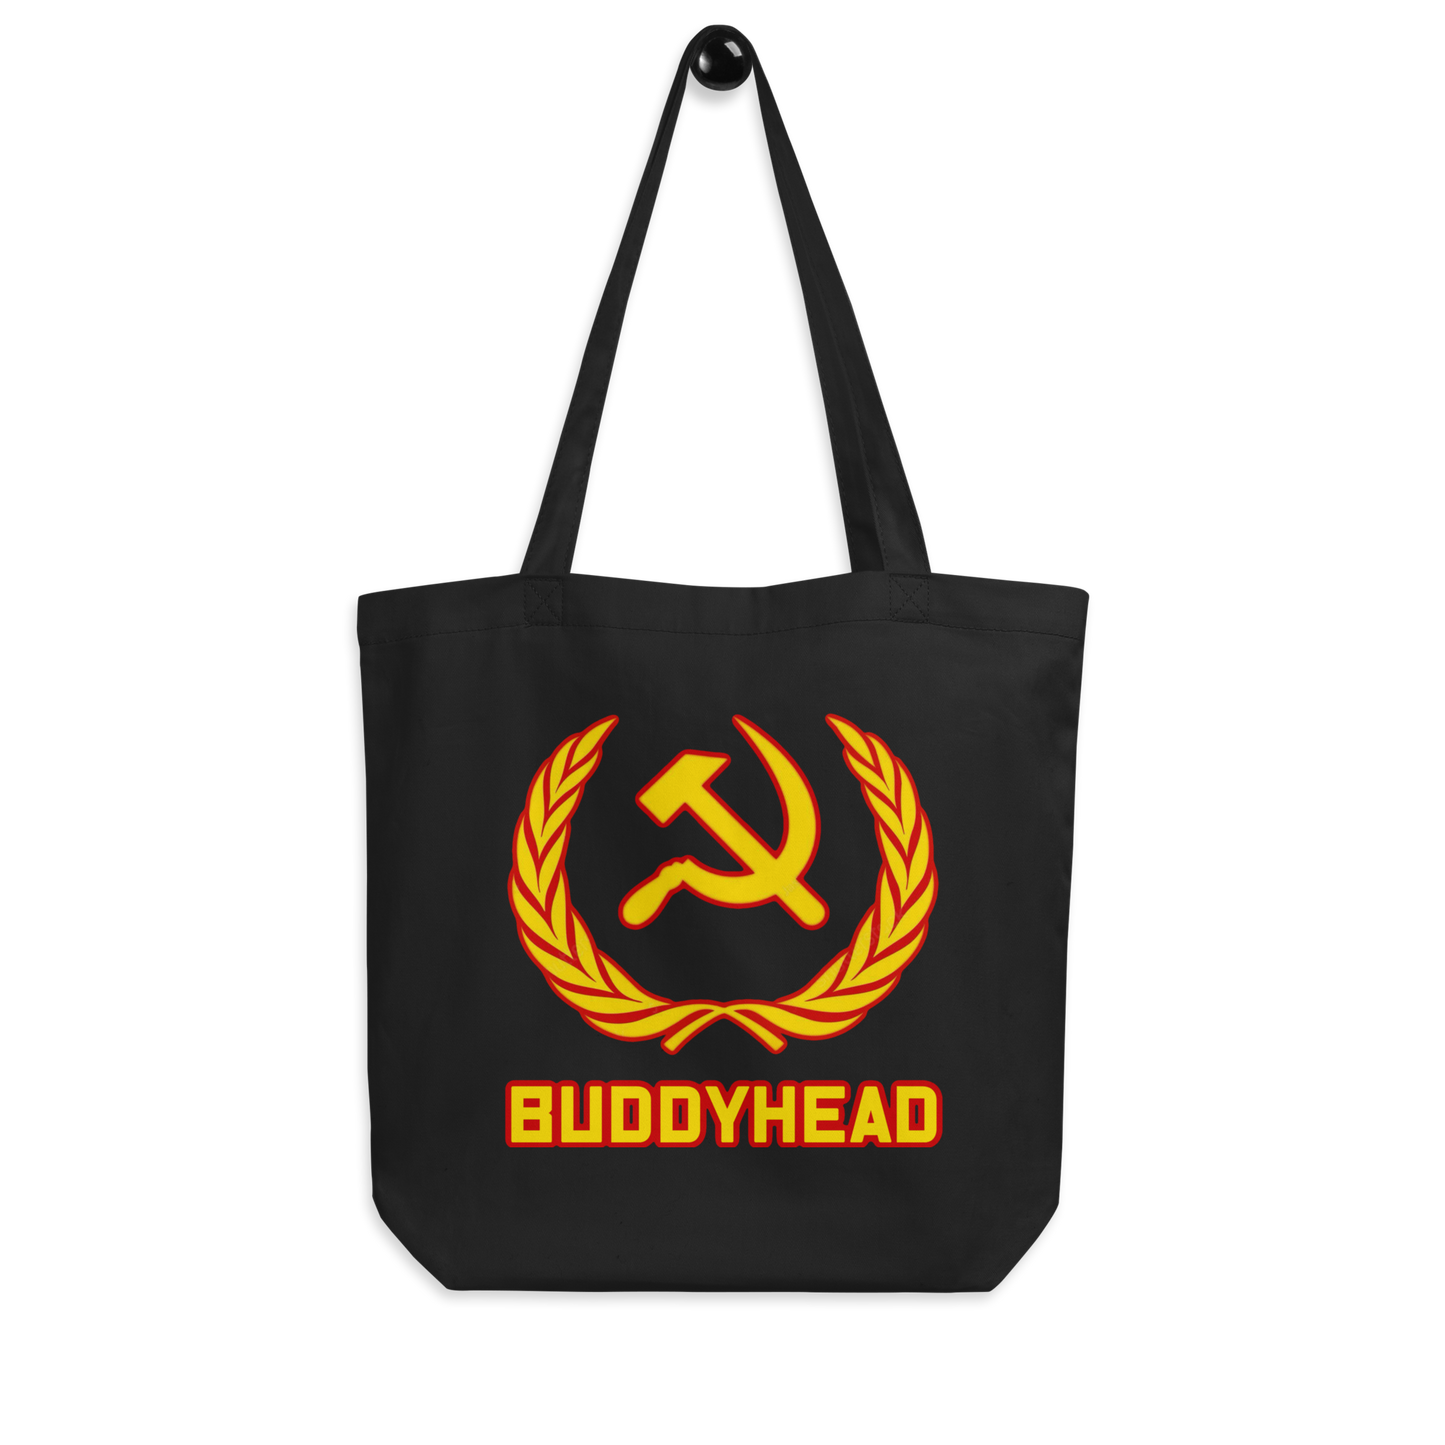 Buddyhead Commie tote